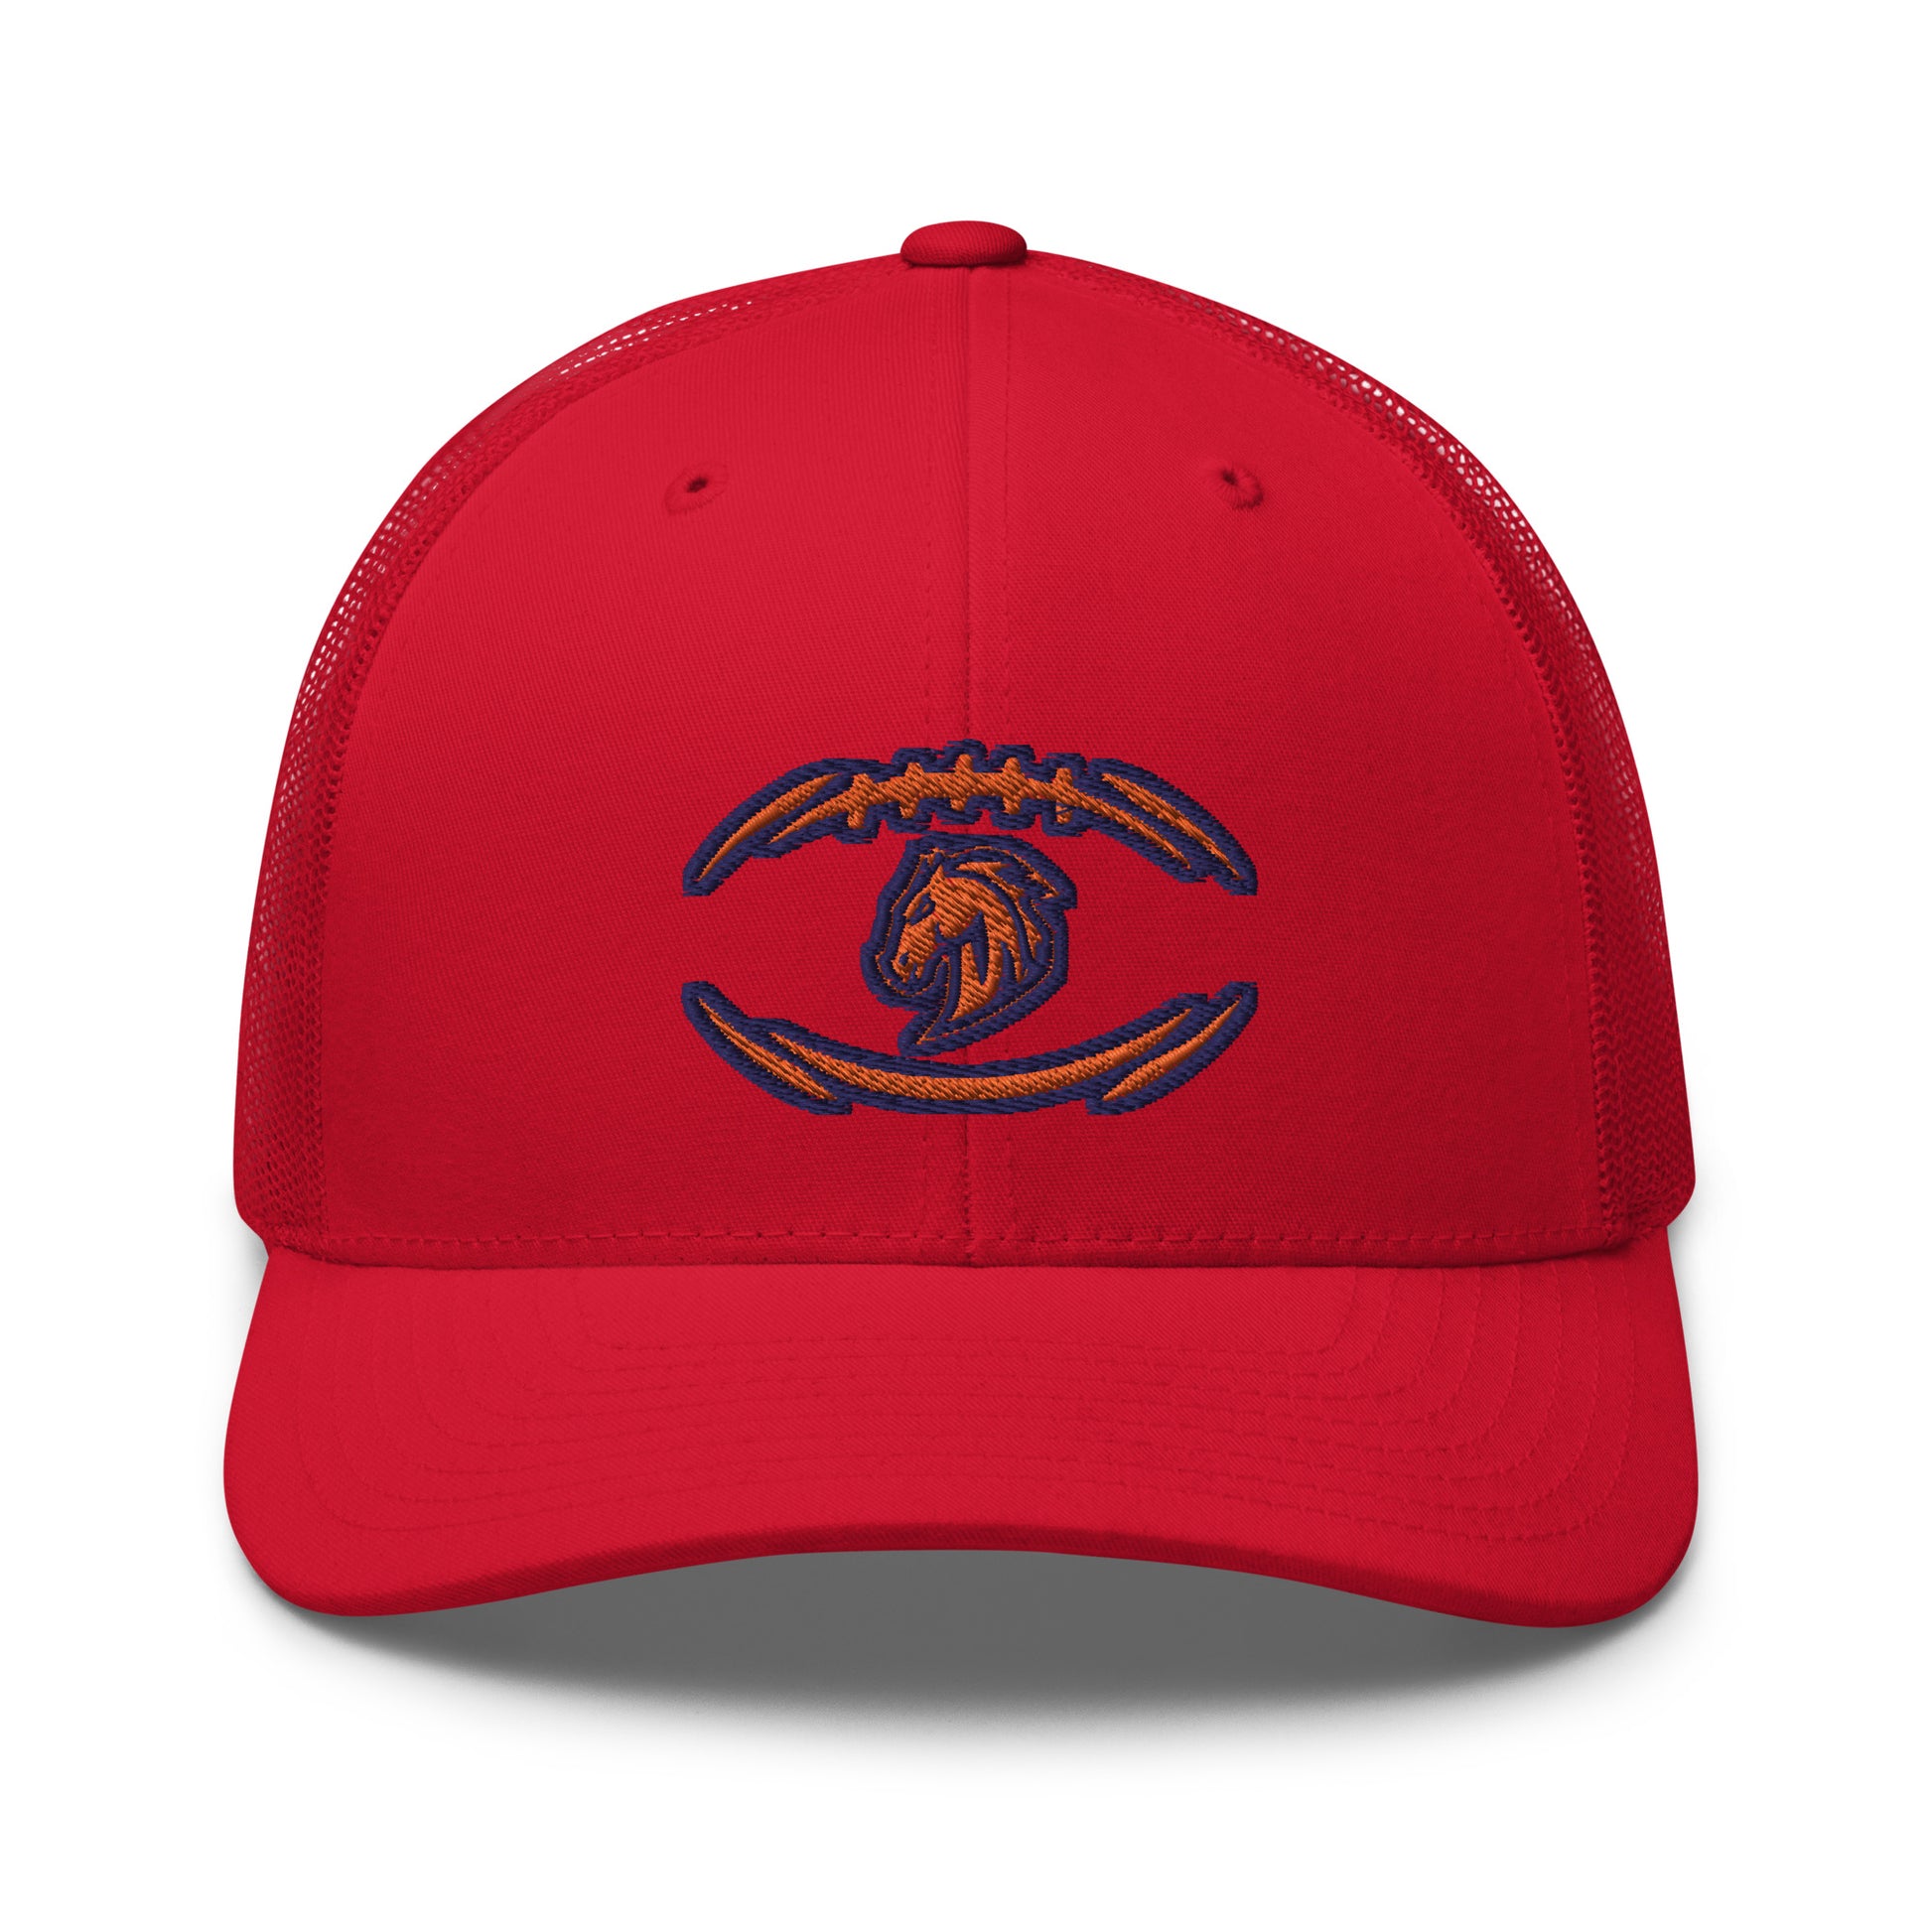 Broncos Hat / Denver Broncos Hat / Broncos Trucker Cap Red